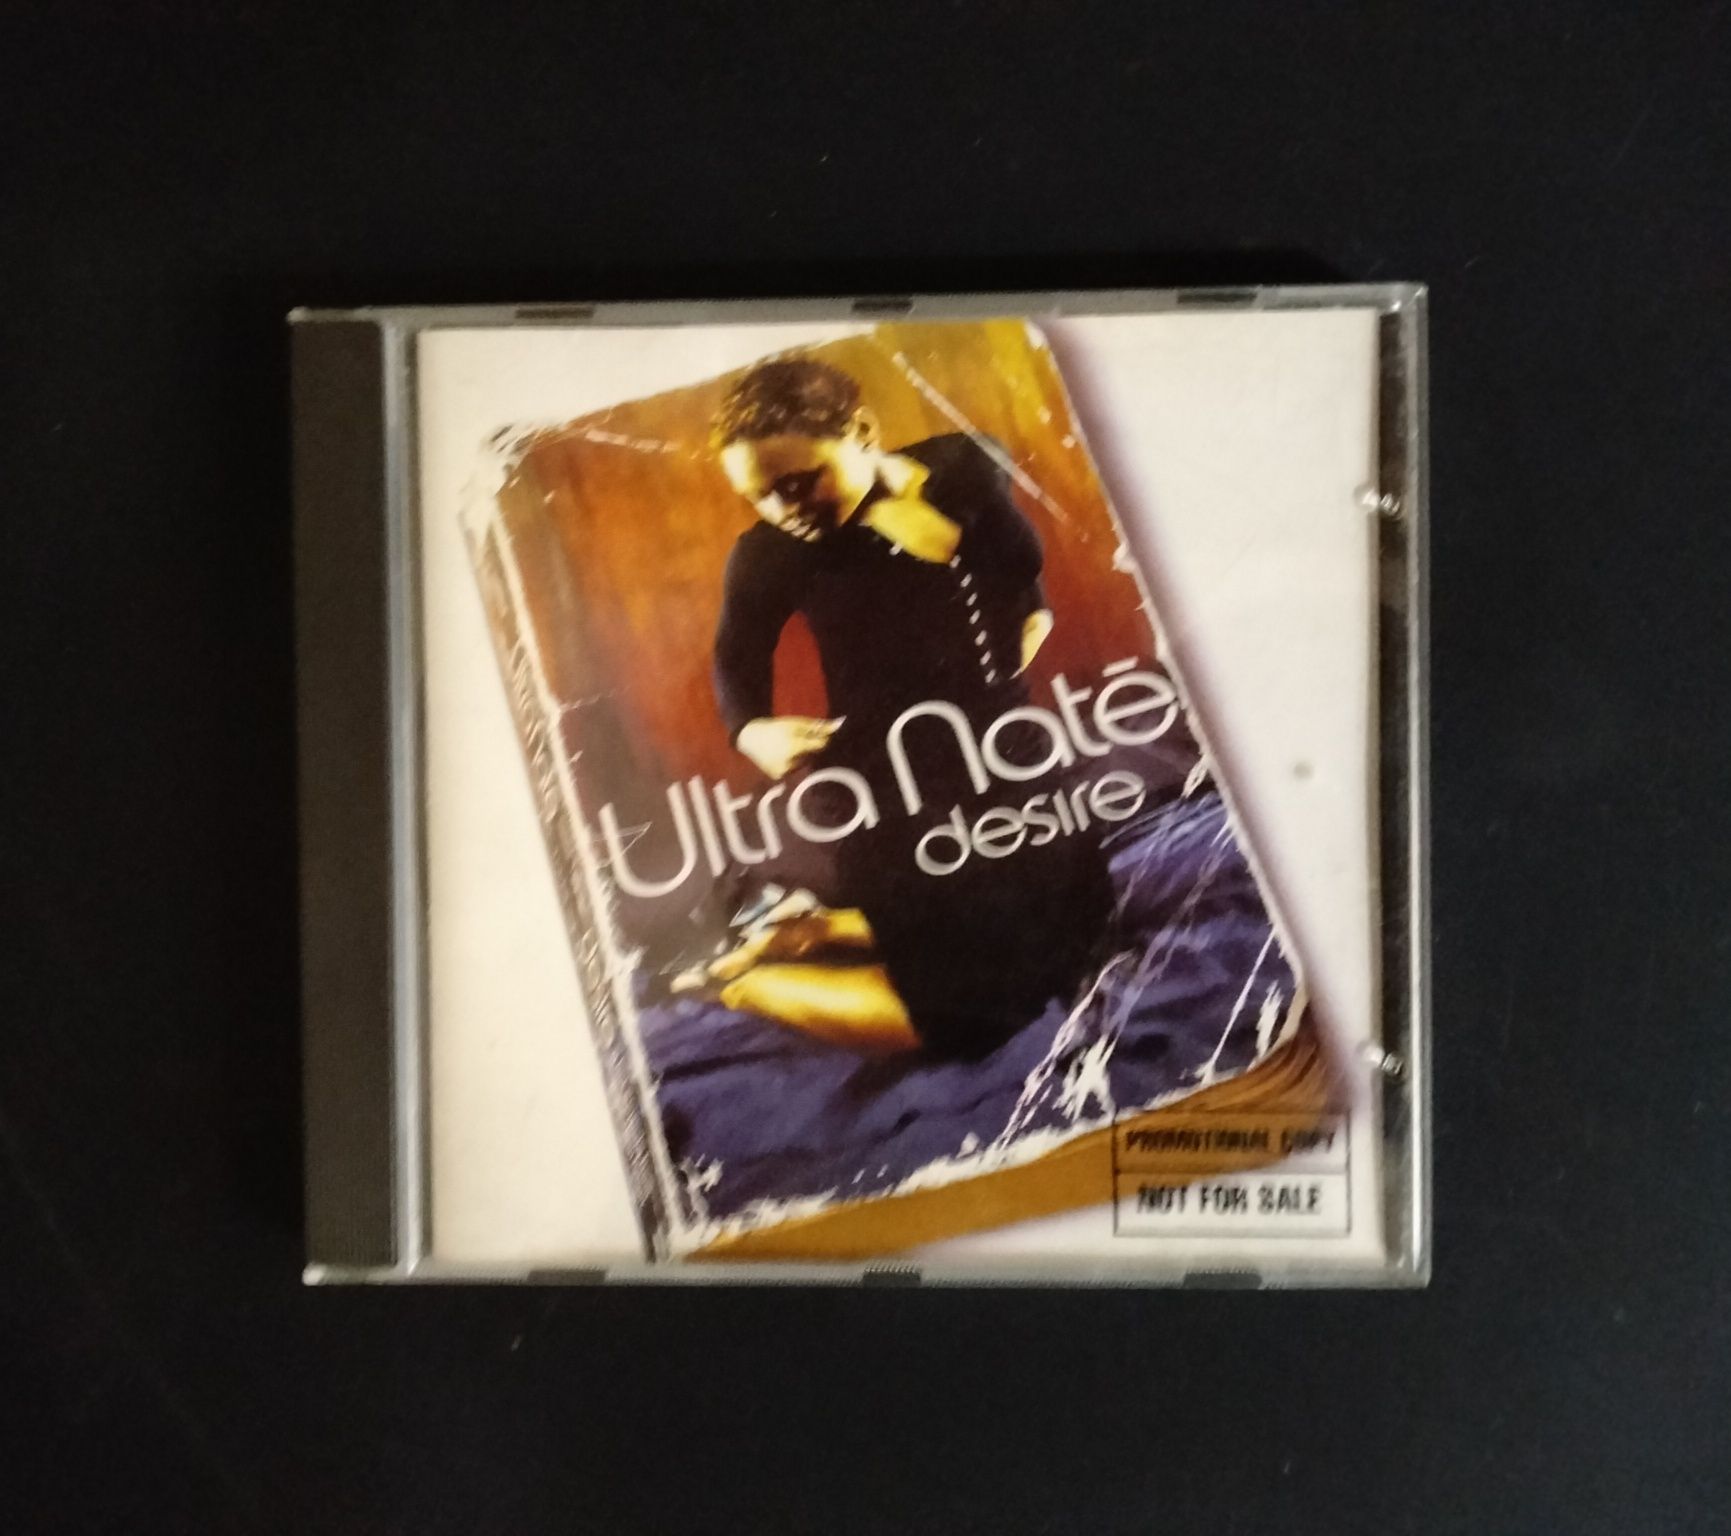 CD promocional "Desire" de Ultra Naté